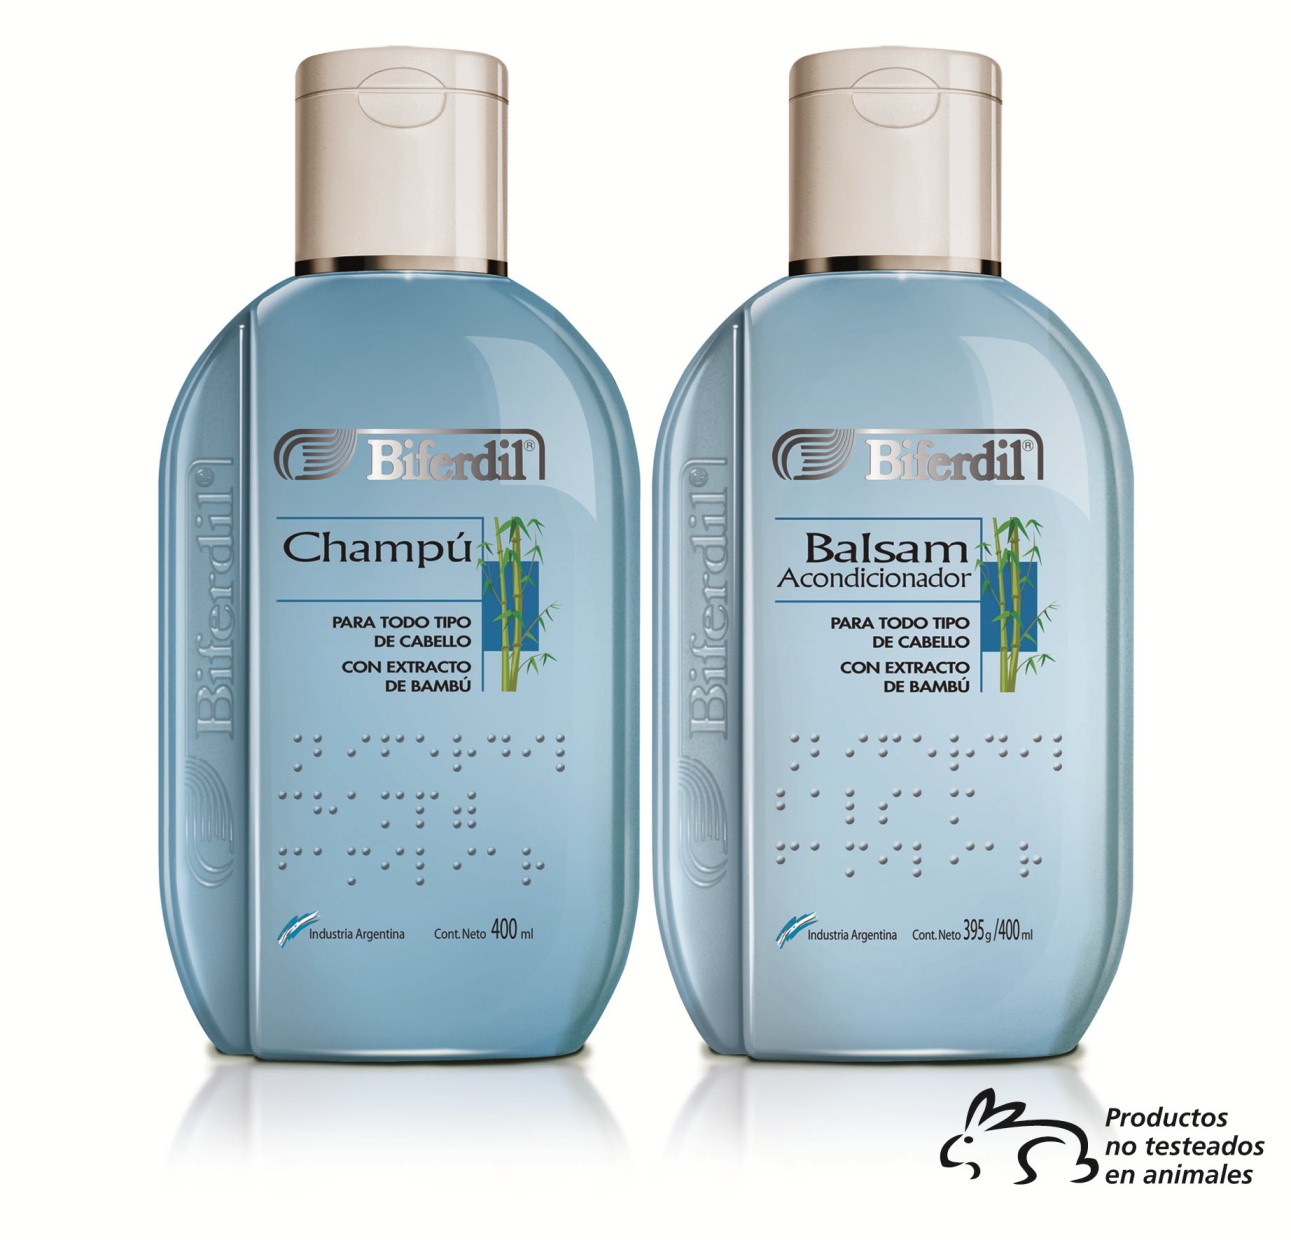 Biferdil-Champú-y-Balsam-con-etiquetado-braille-Baja